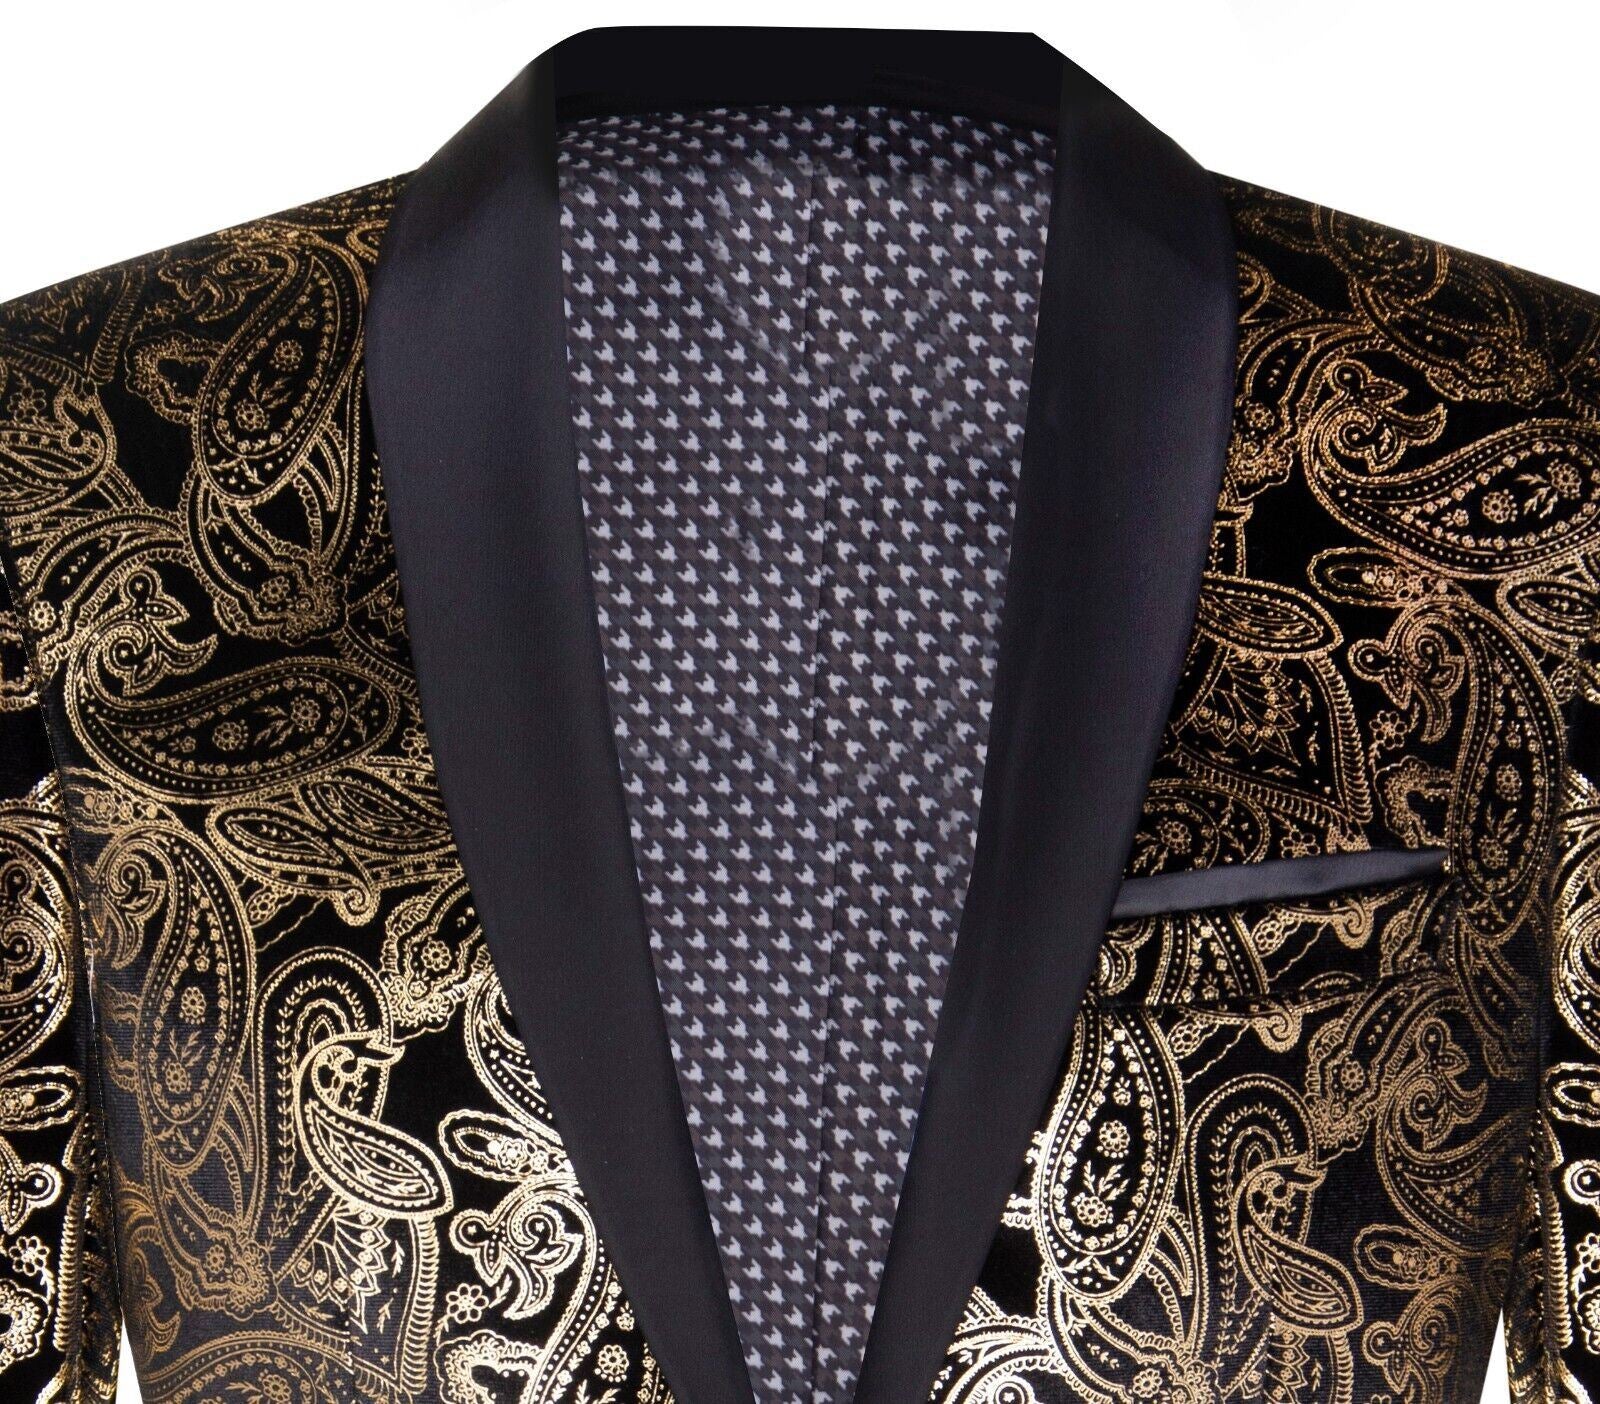 Mens Classic Gold Paisley Black Velvet Tuxedo Dinner Jacket Tailored Fit Blazer - Upperclass Fashions 